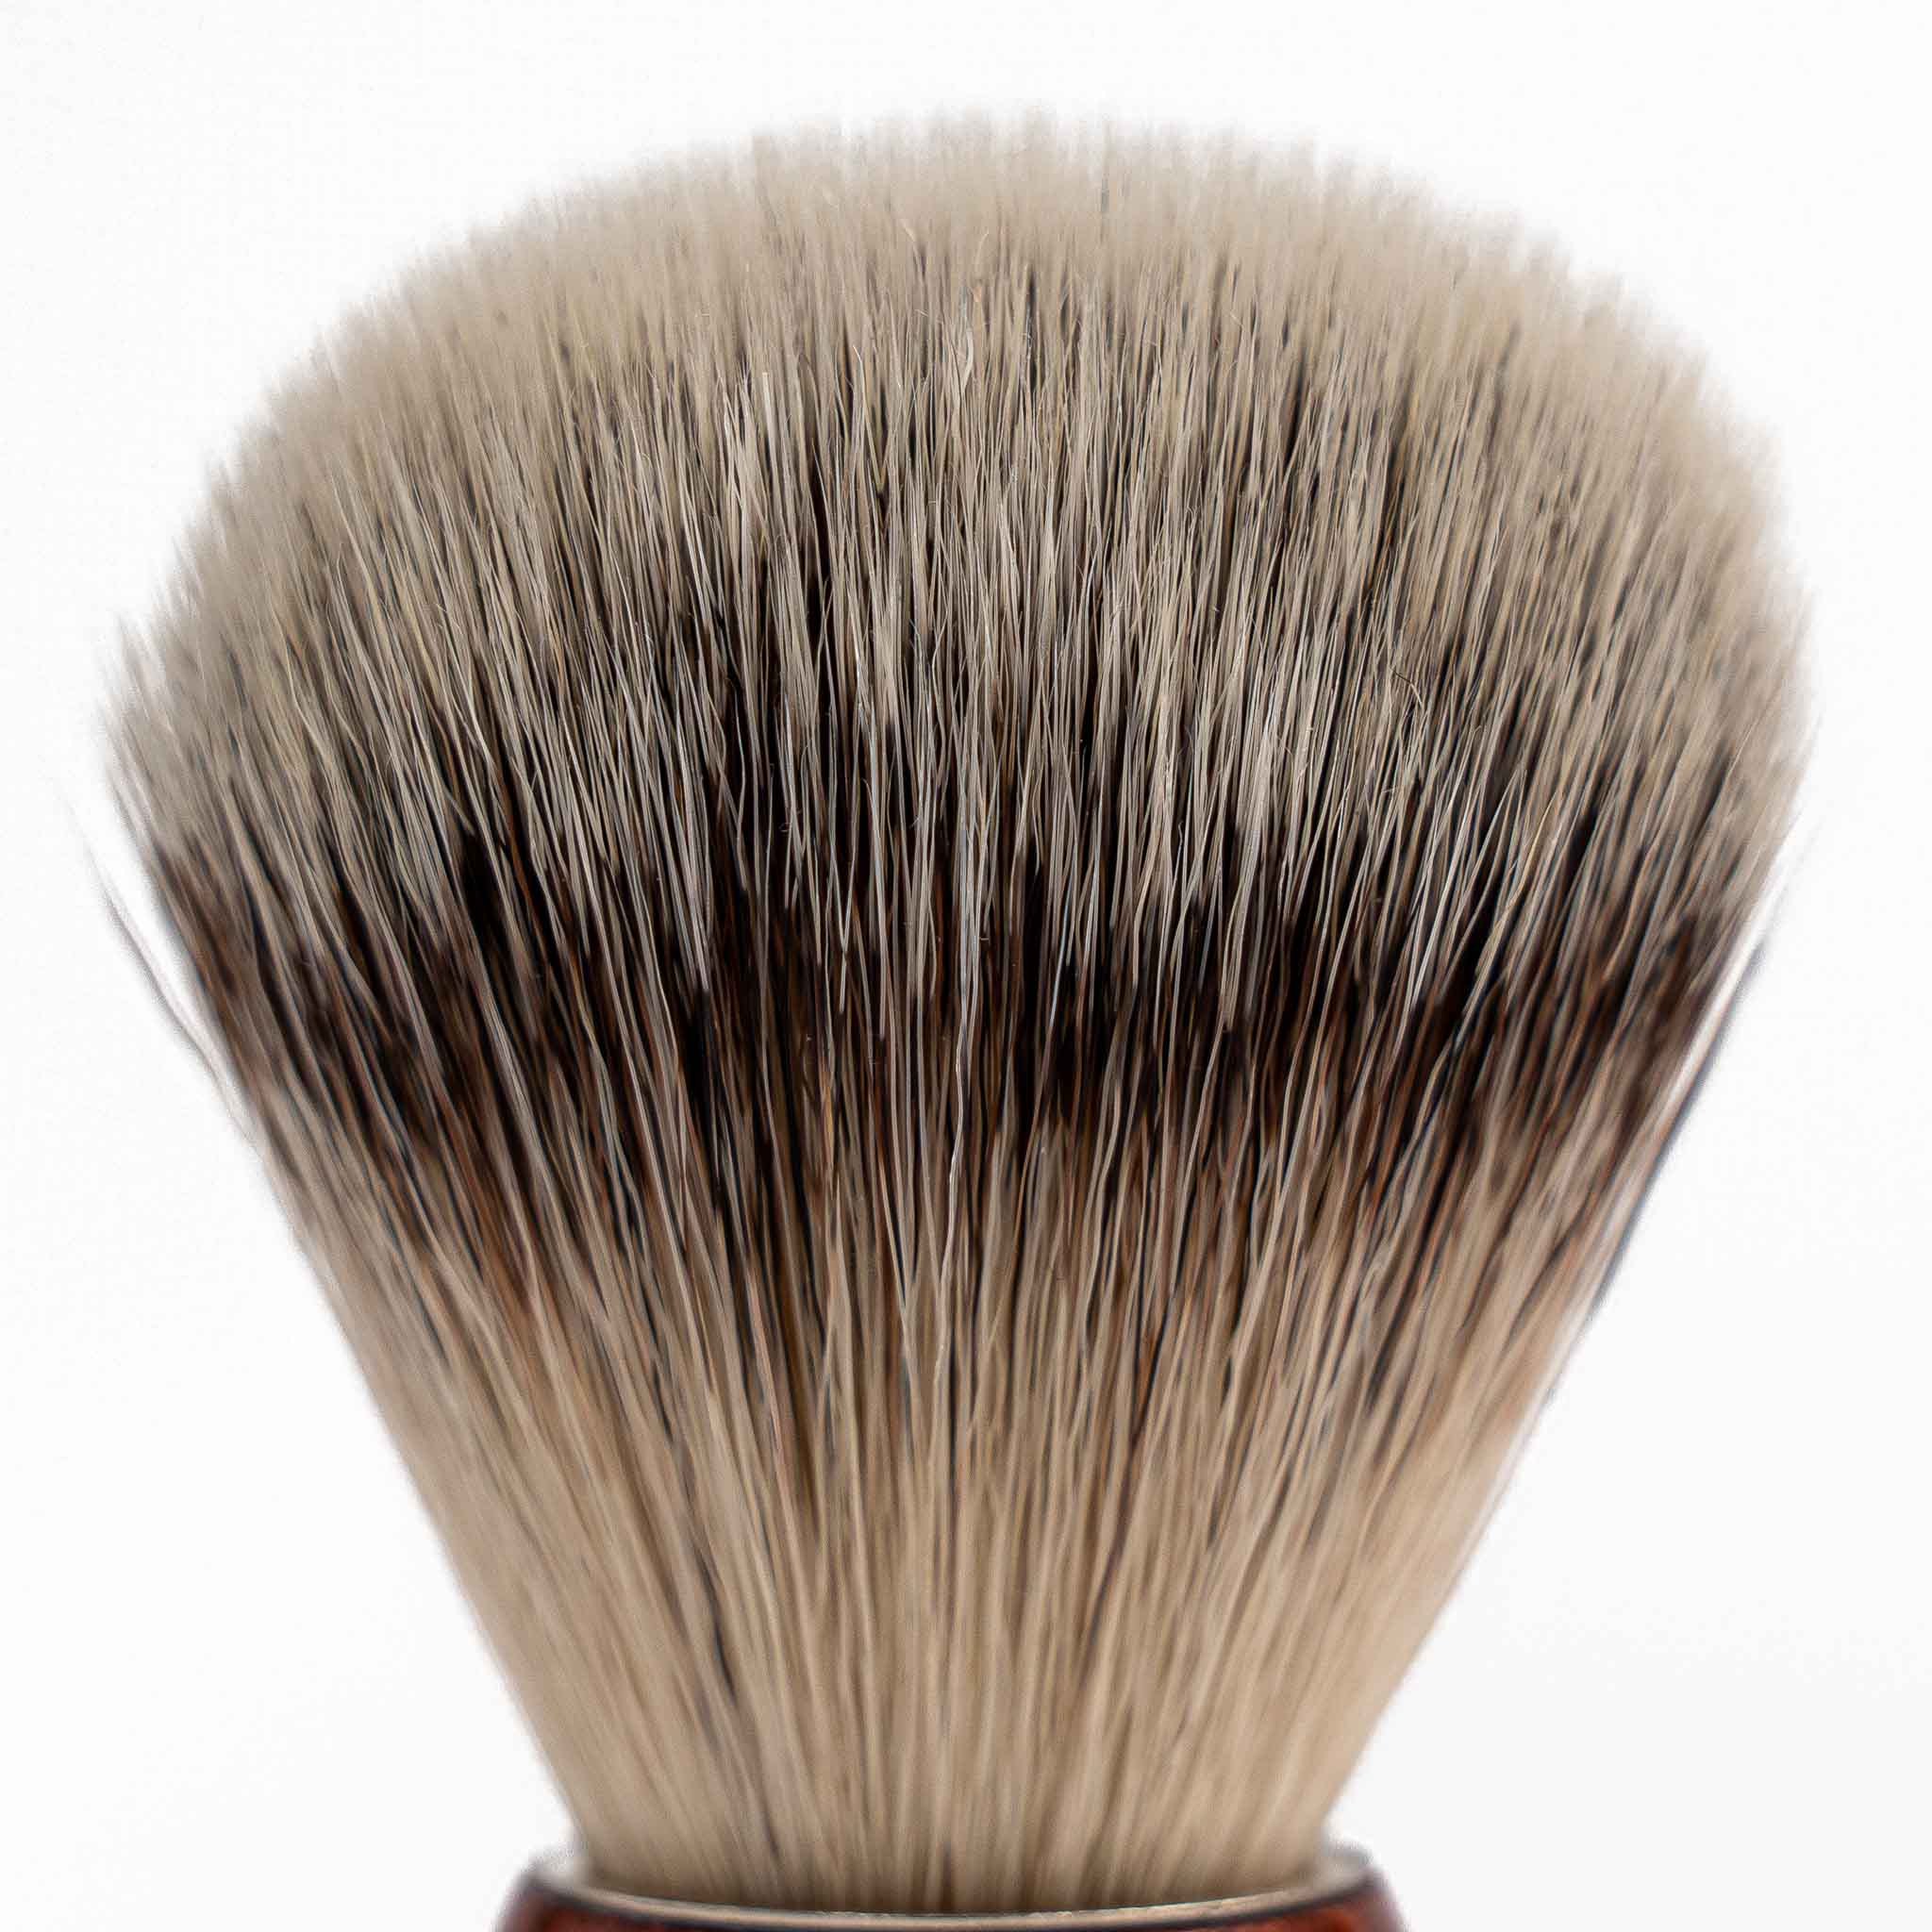 Brent Berkeley original shaving brush synthetic silvertip fibre